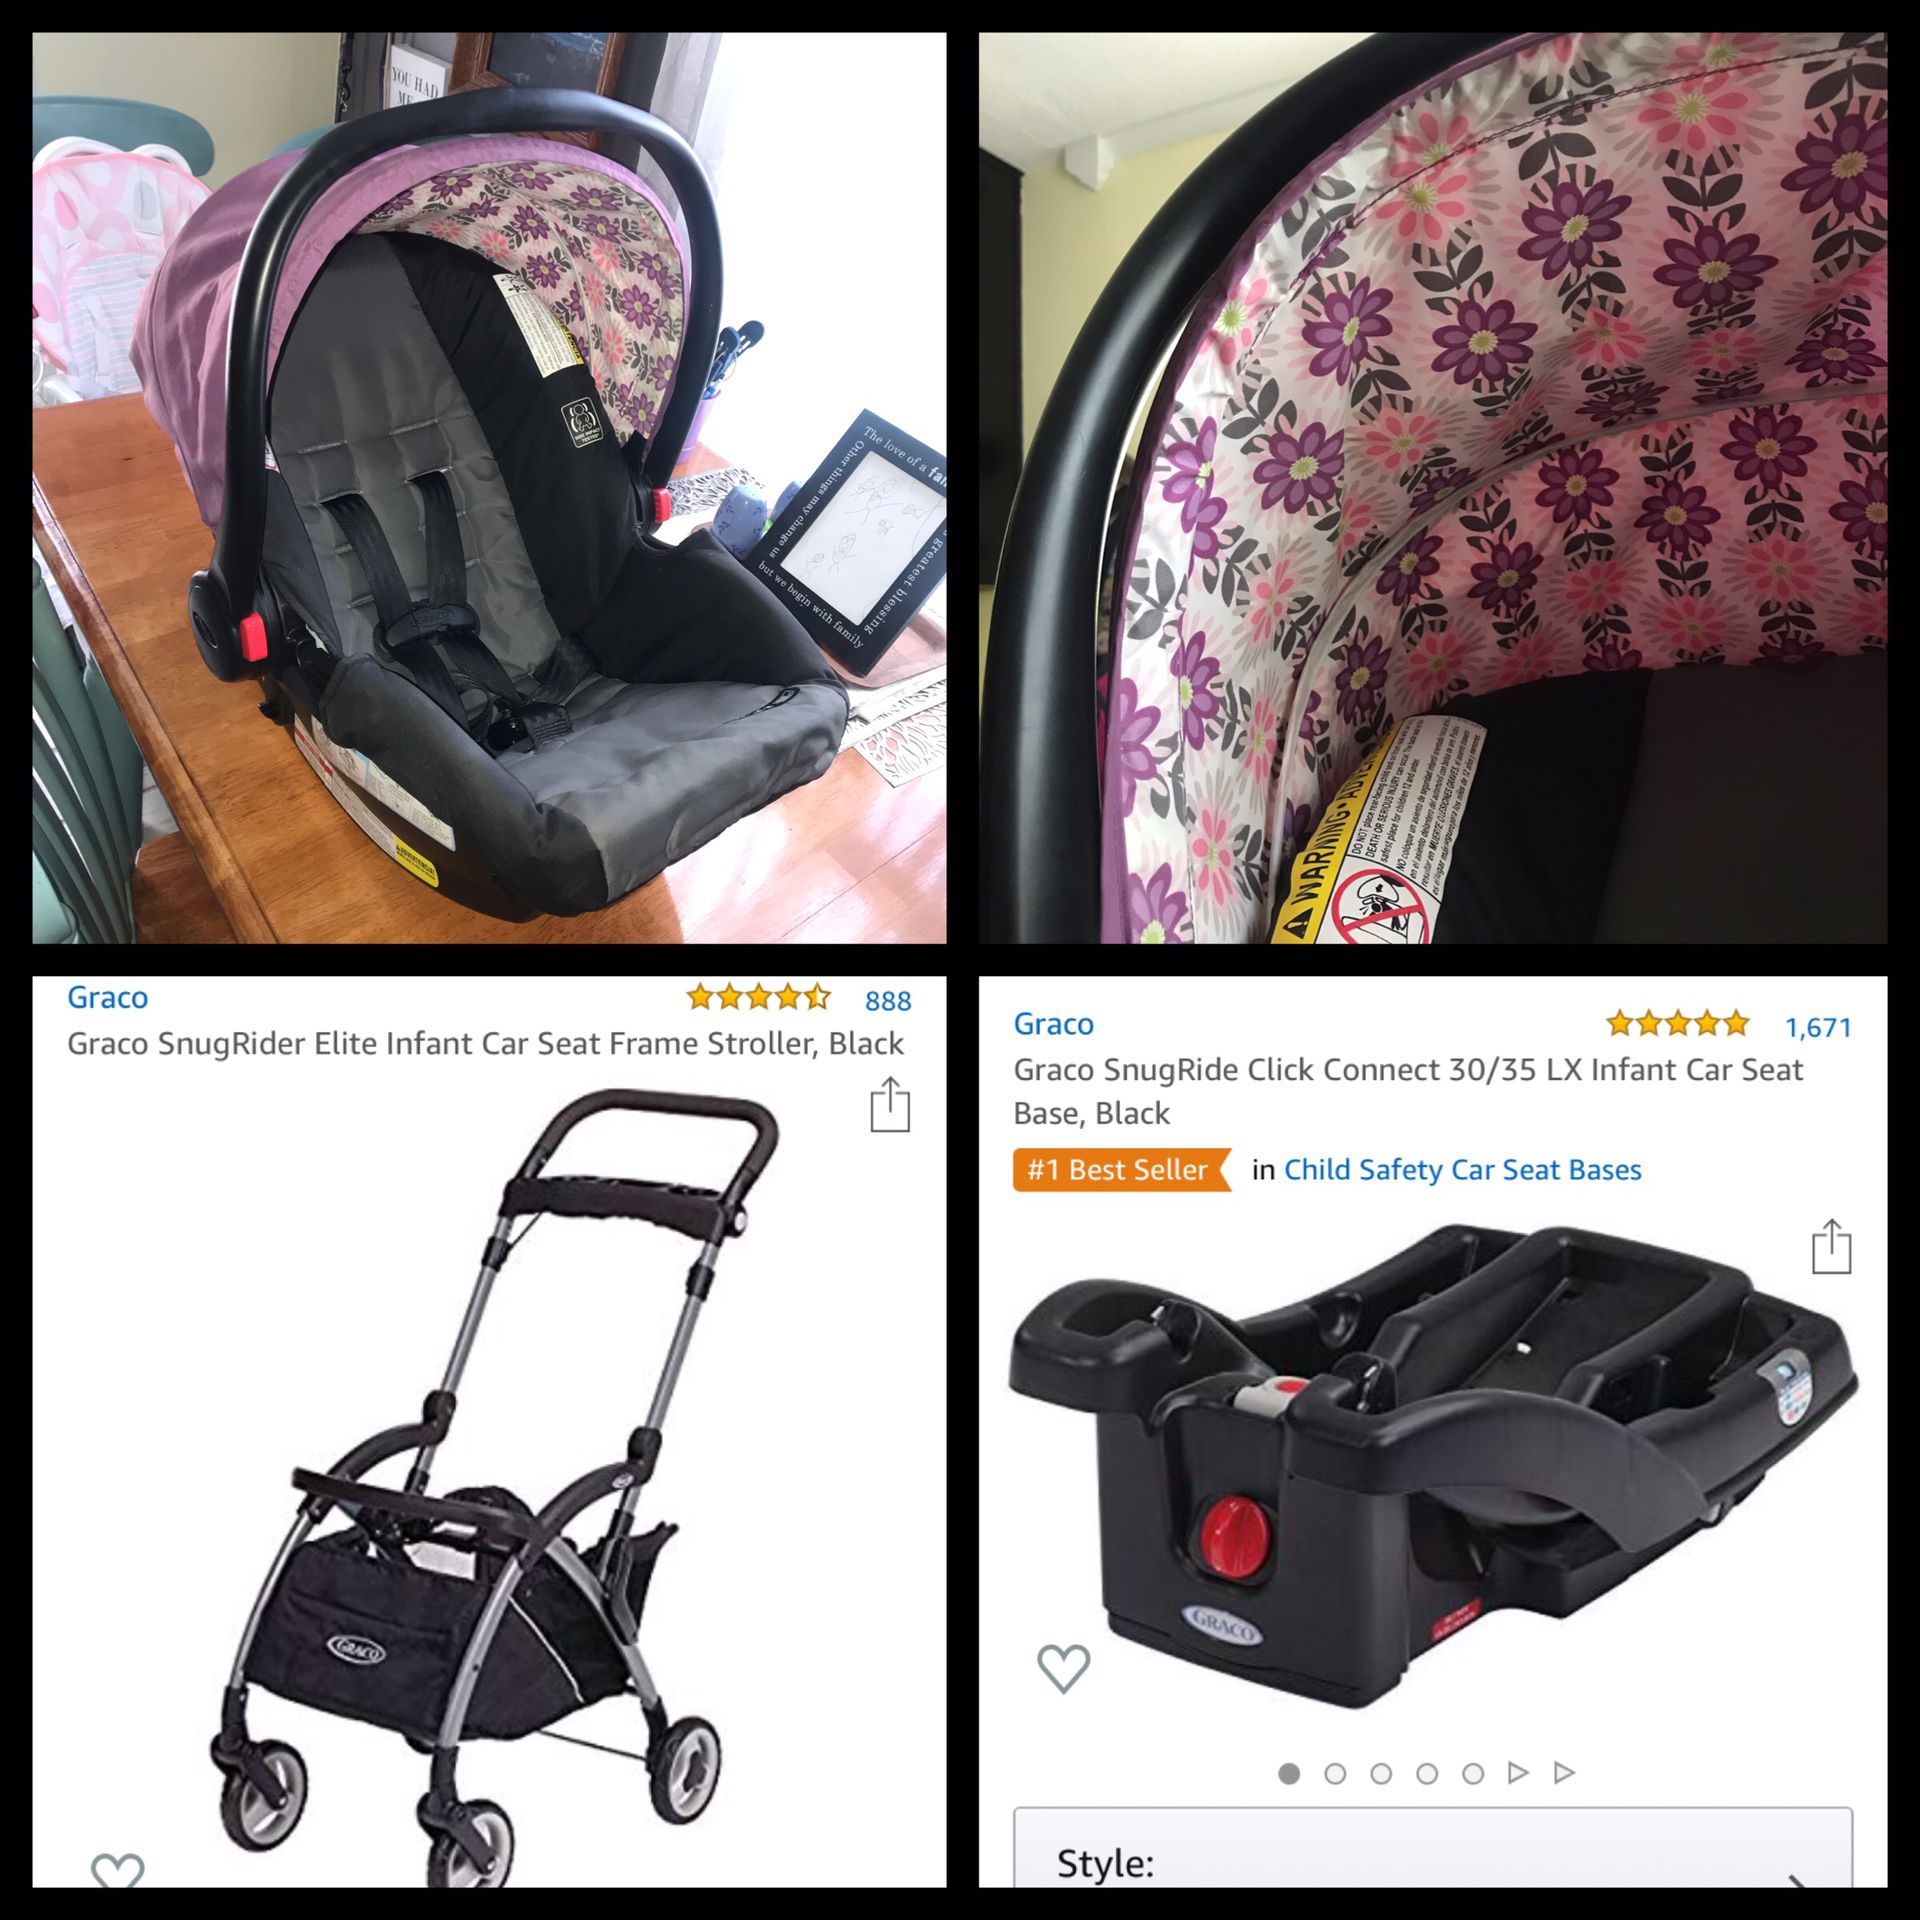 Graco Snugride Click Connect infant car seat, 2 bases, stroller